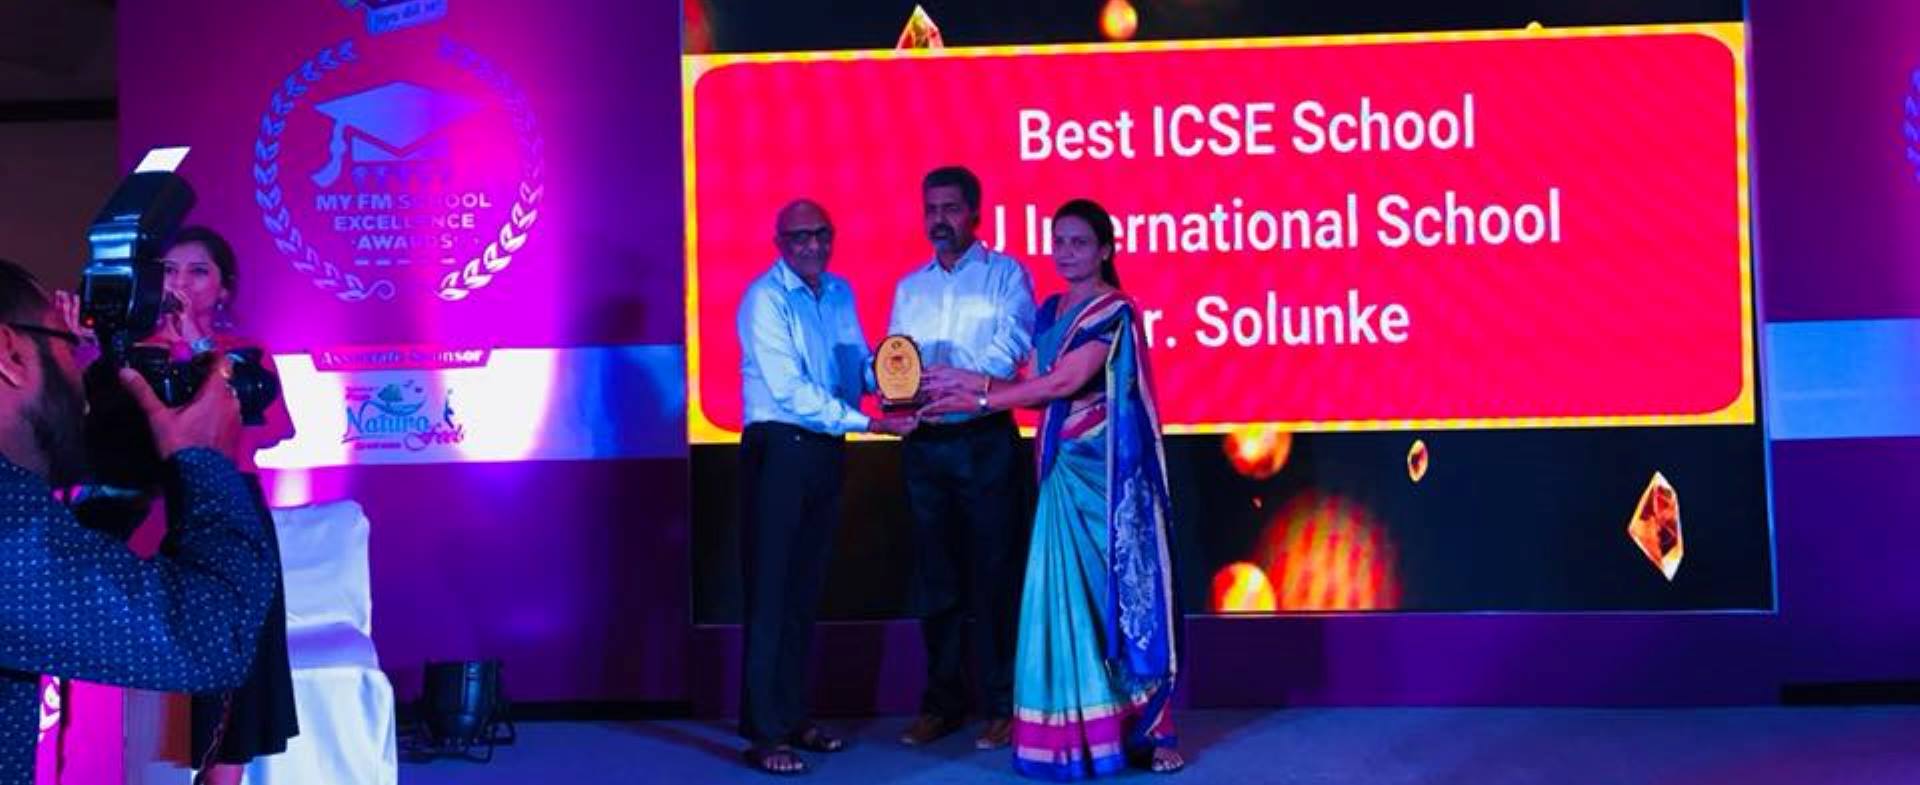 Best ICSE School Award by Dainik Bhaskar Group